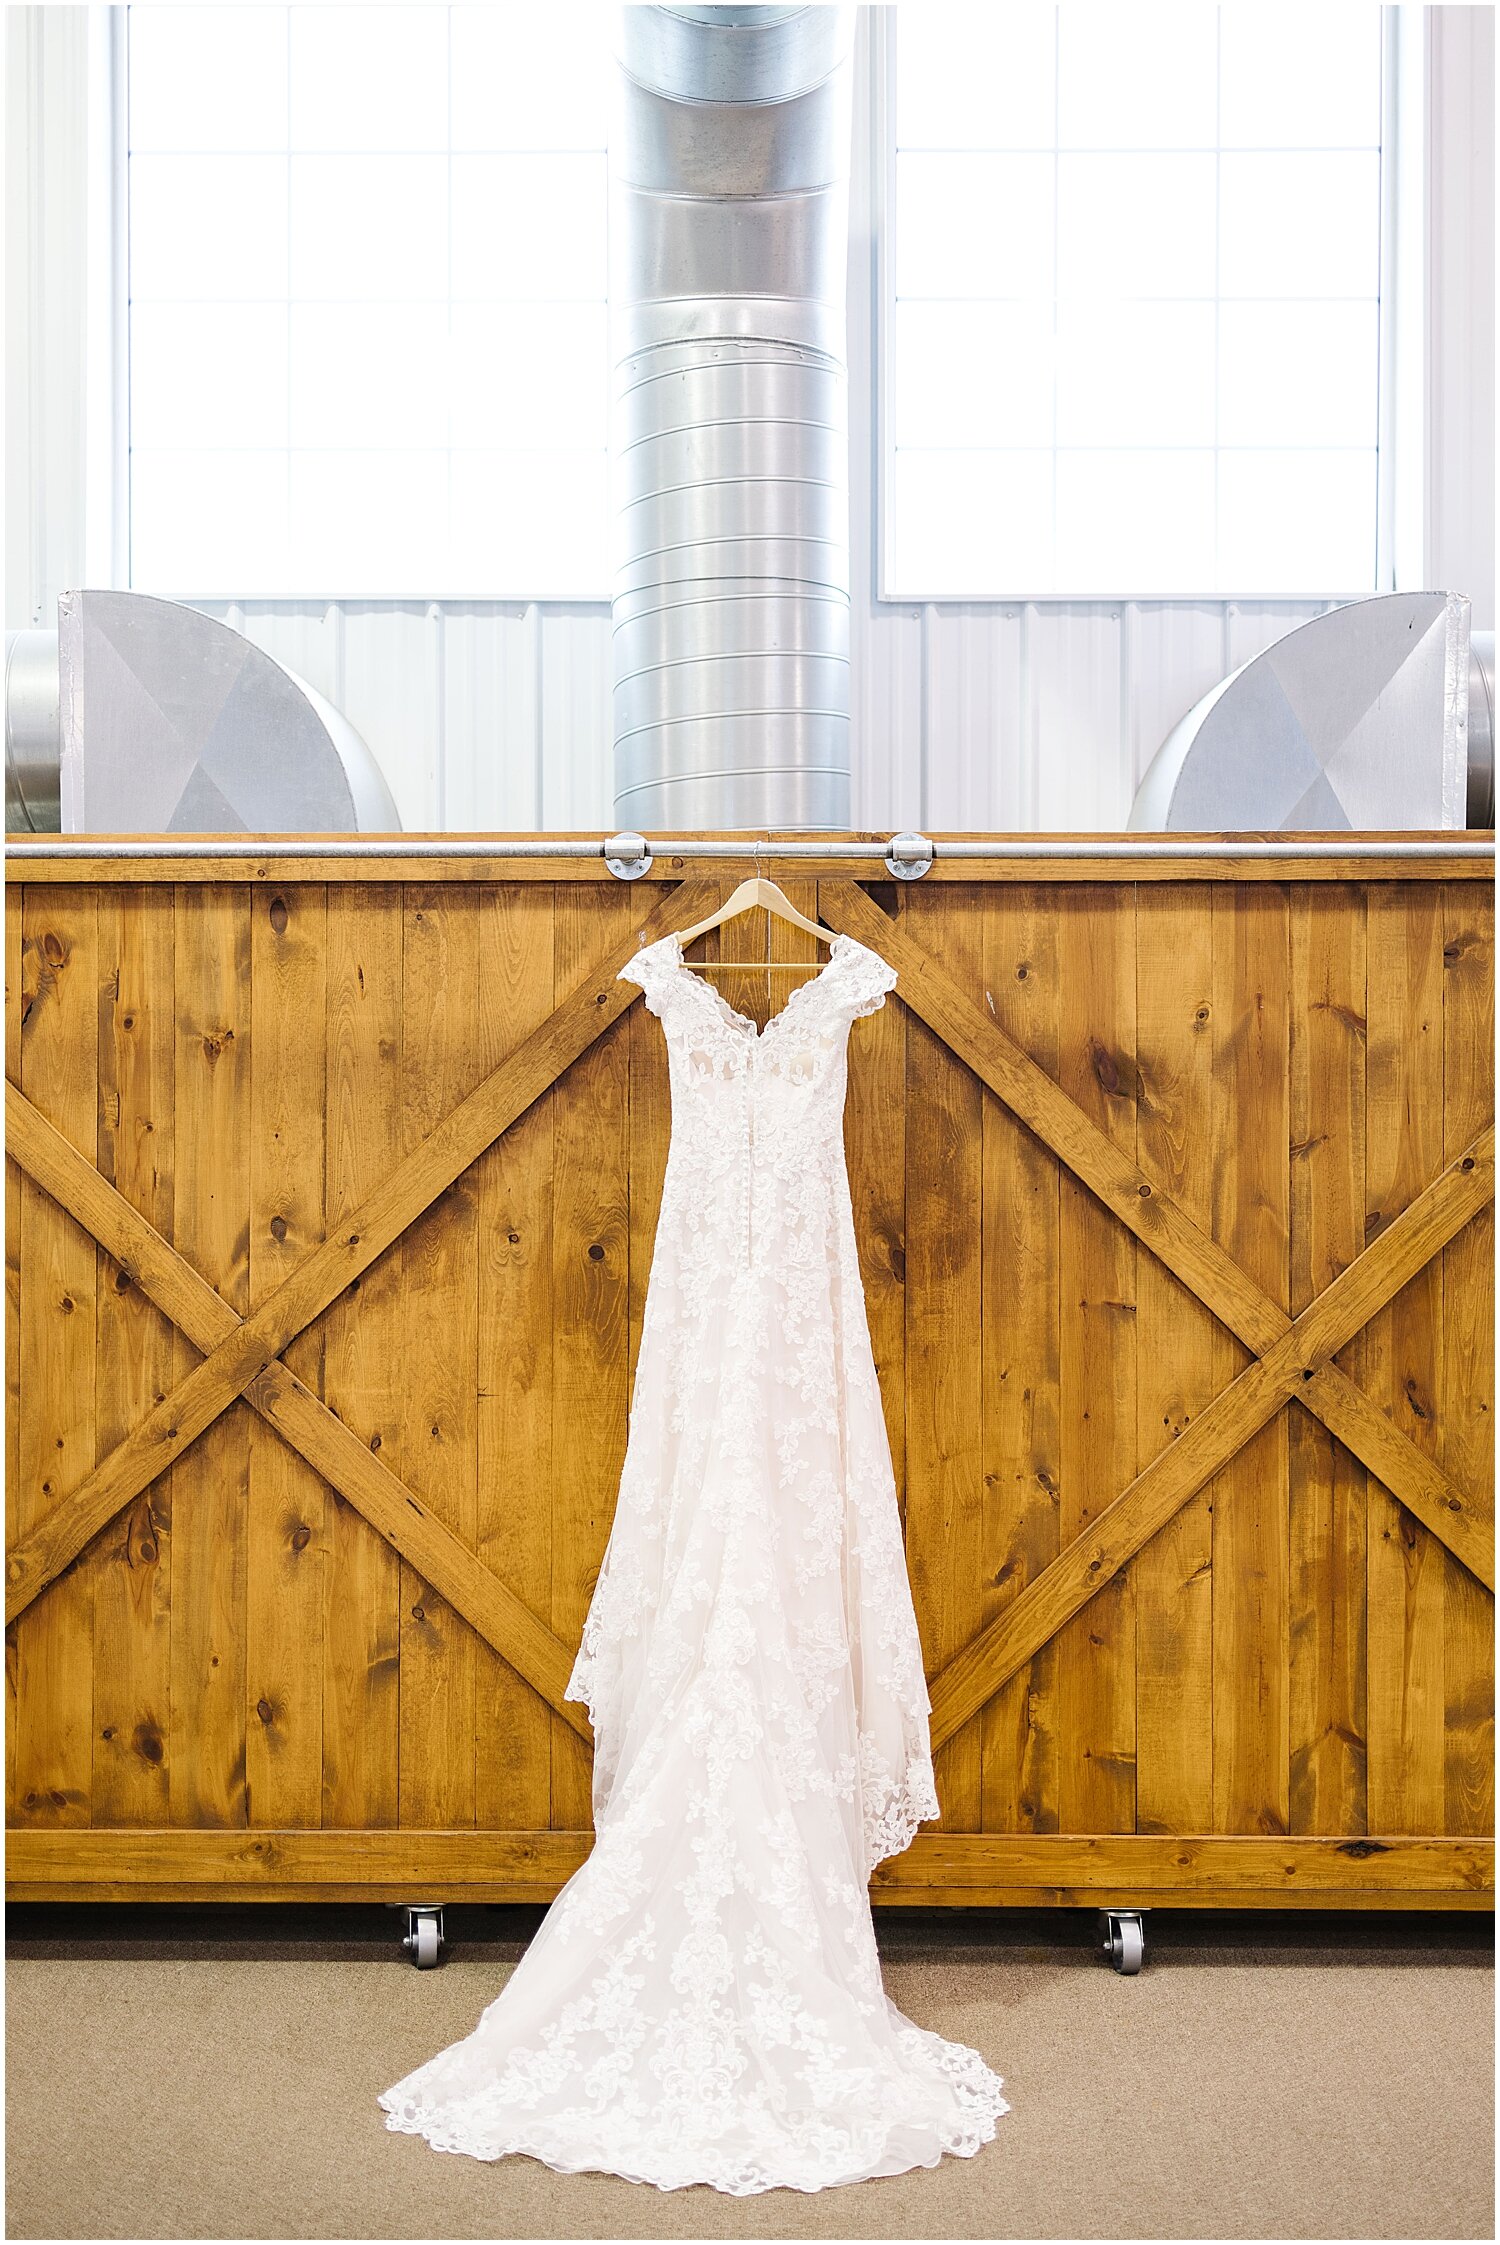  bride’s wedding dress hanging before the wedding 